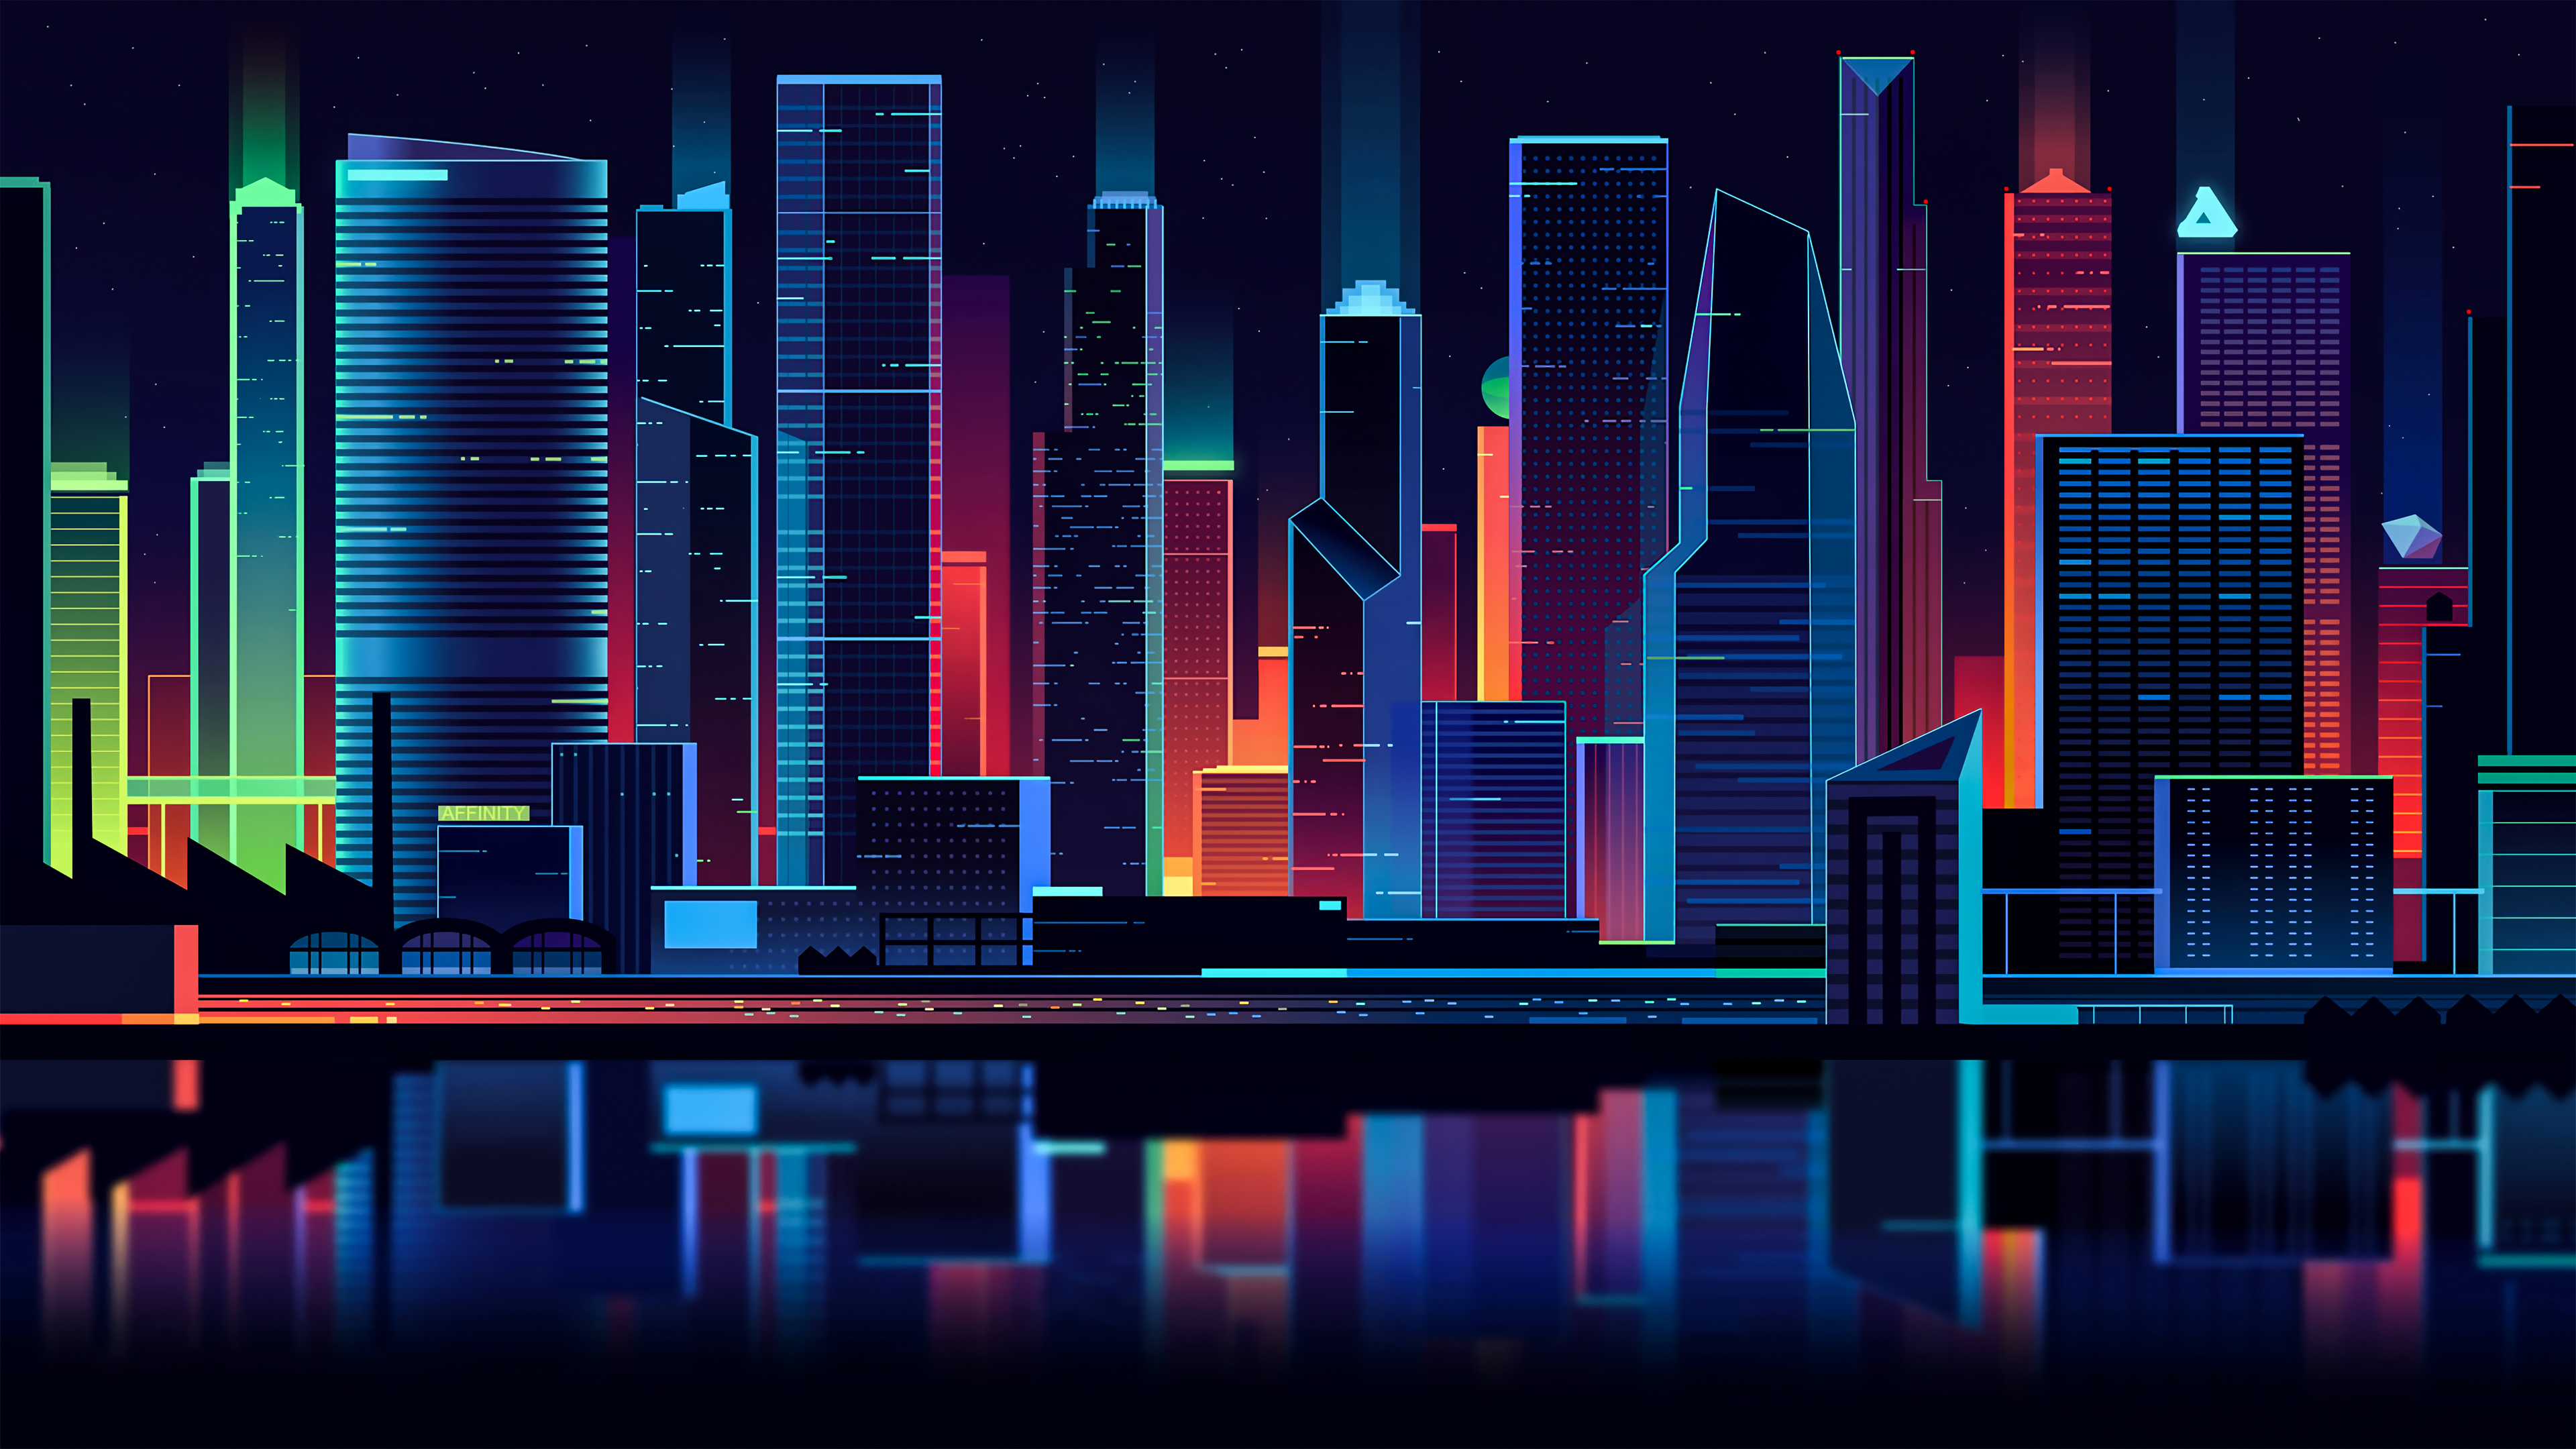 Artistic City 4k Ultra HD Wallpaper by Romain Trystram